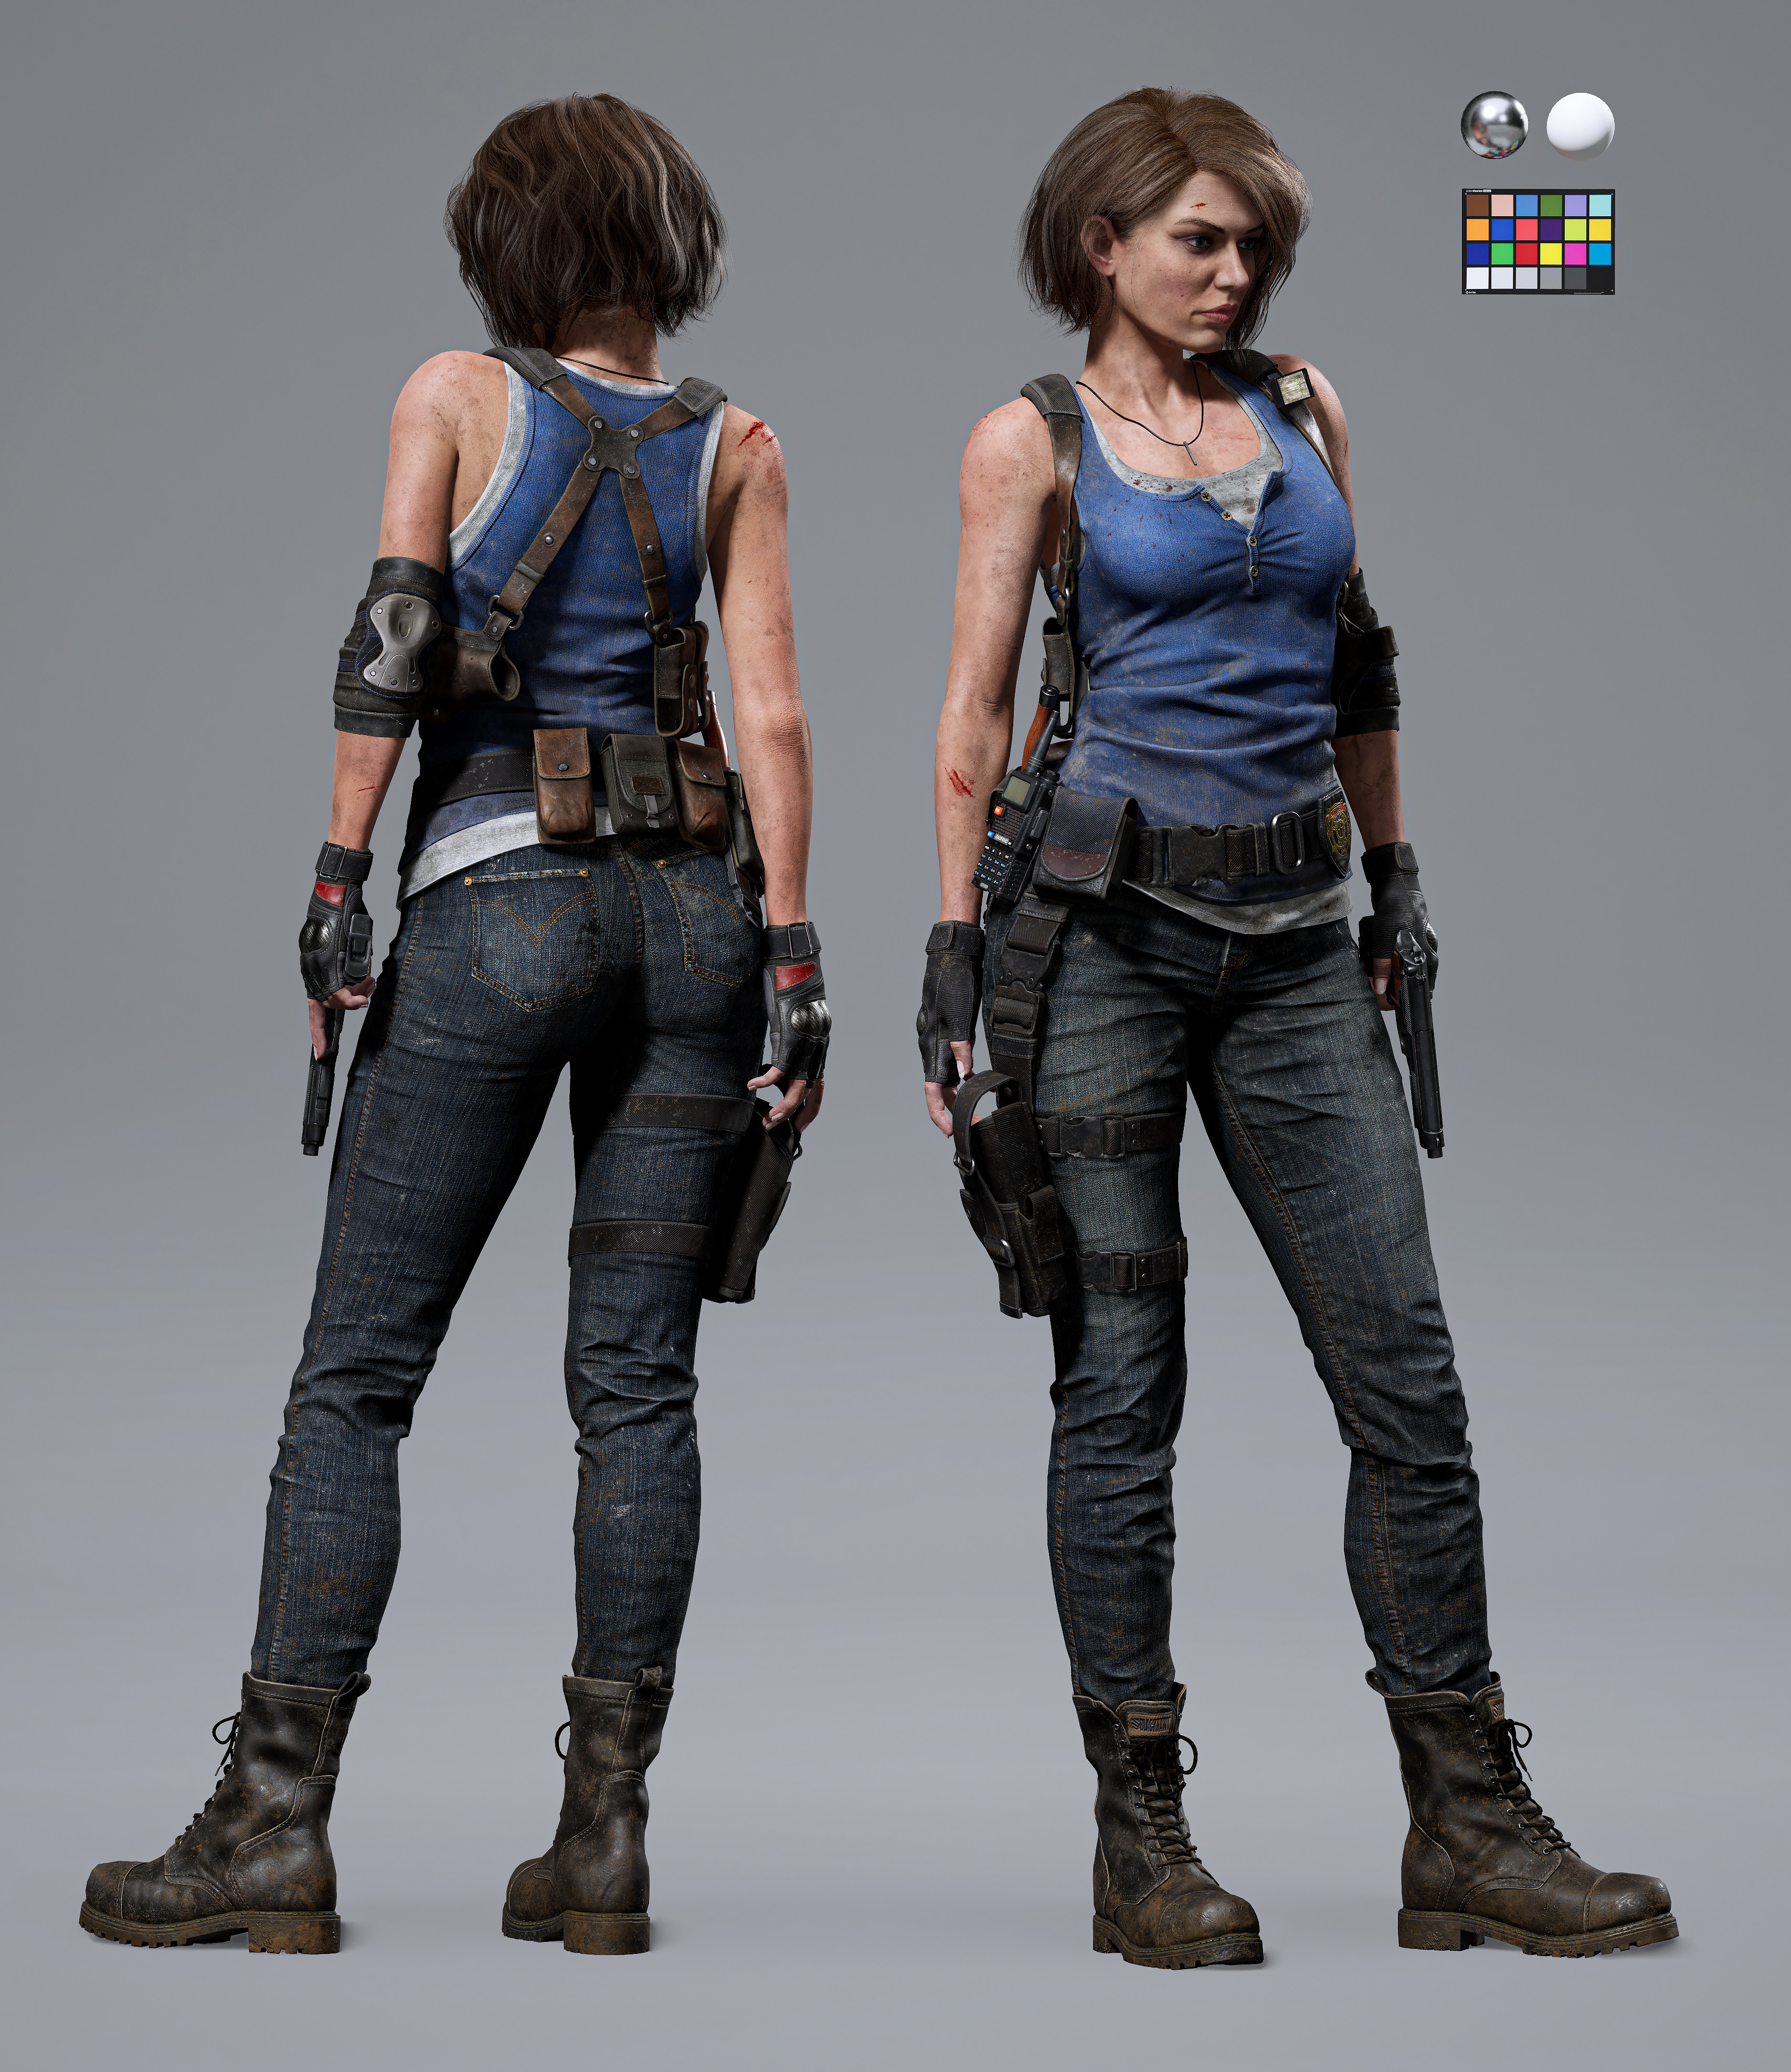 Jill Valentine, Resident Evil 3 Fan Art by Manu Herrador